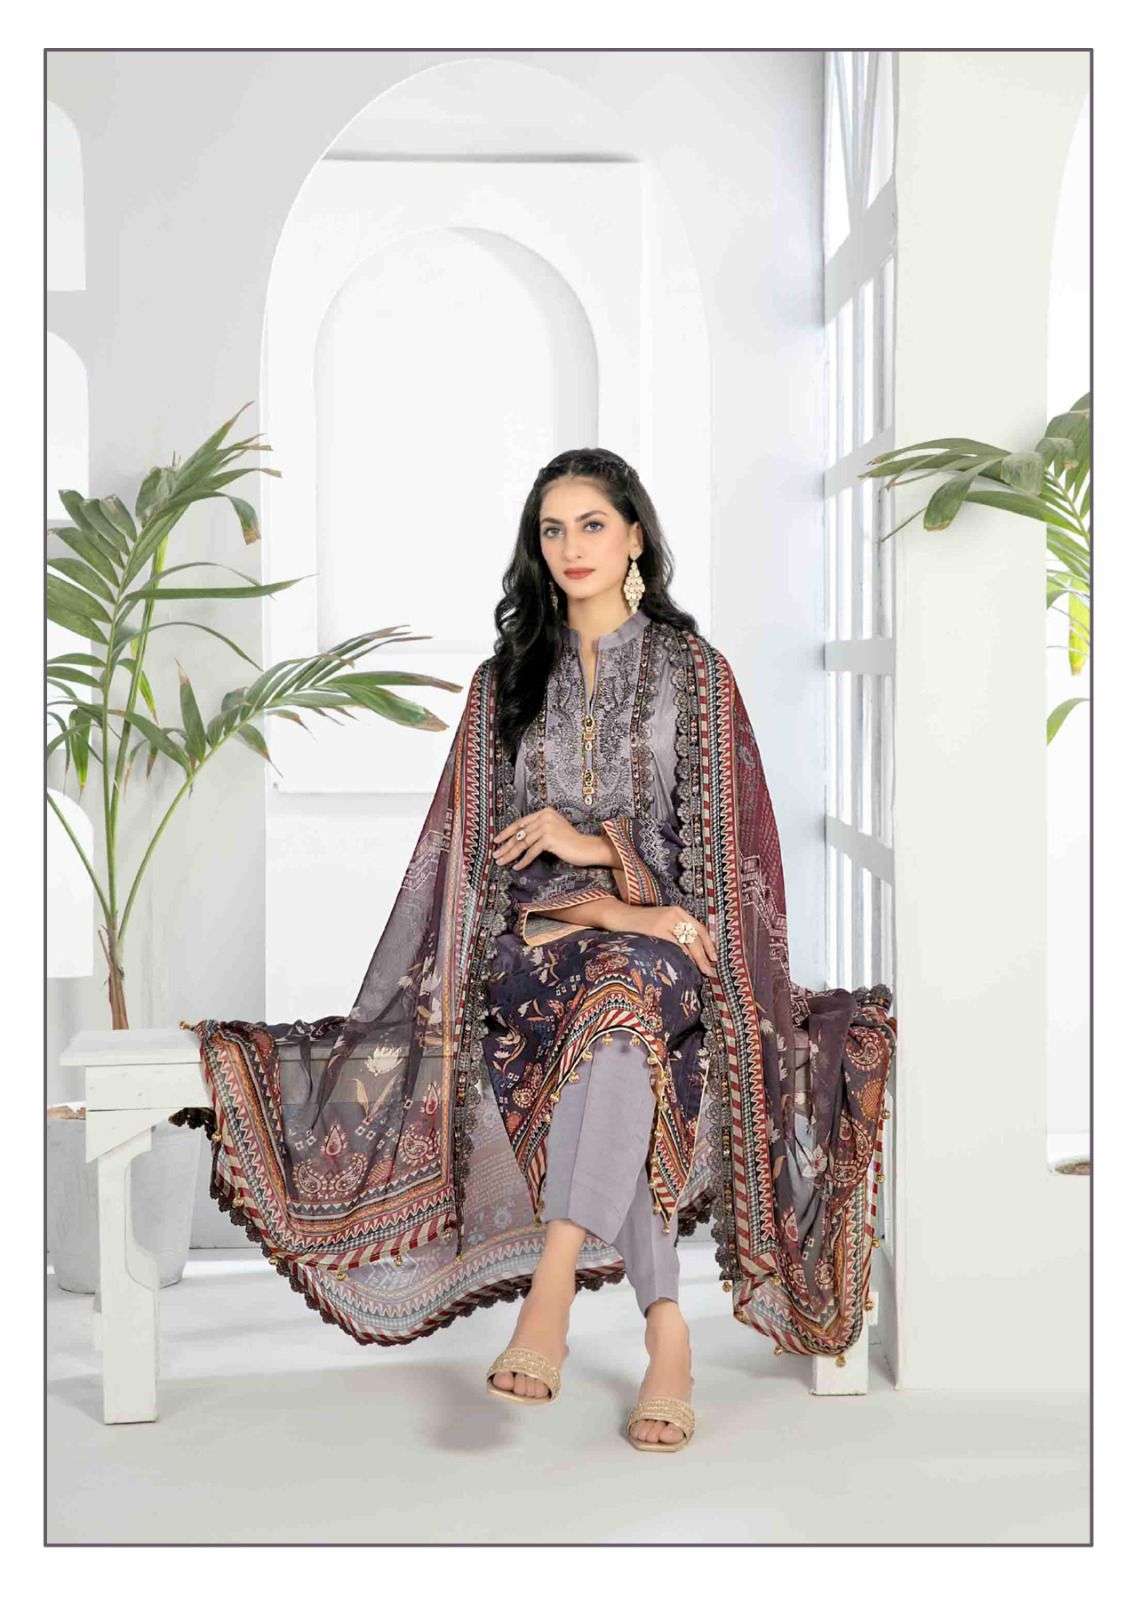 madhav fashion riwaaz vol-5 5001-5006 series pure lawn cotton designer dress material catalogue supplier surat 